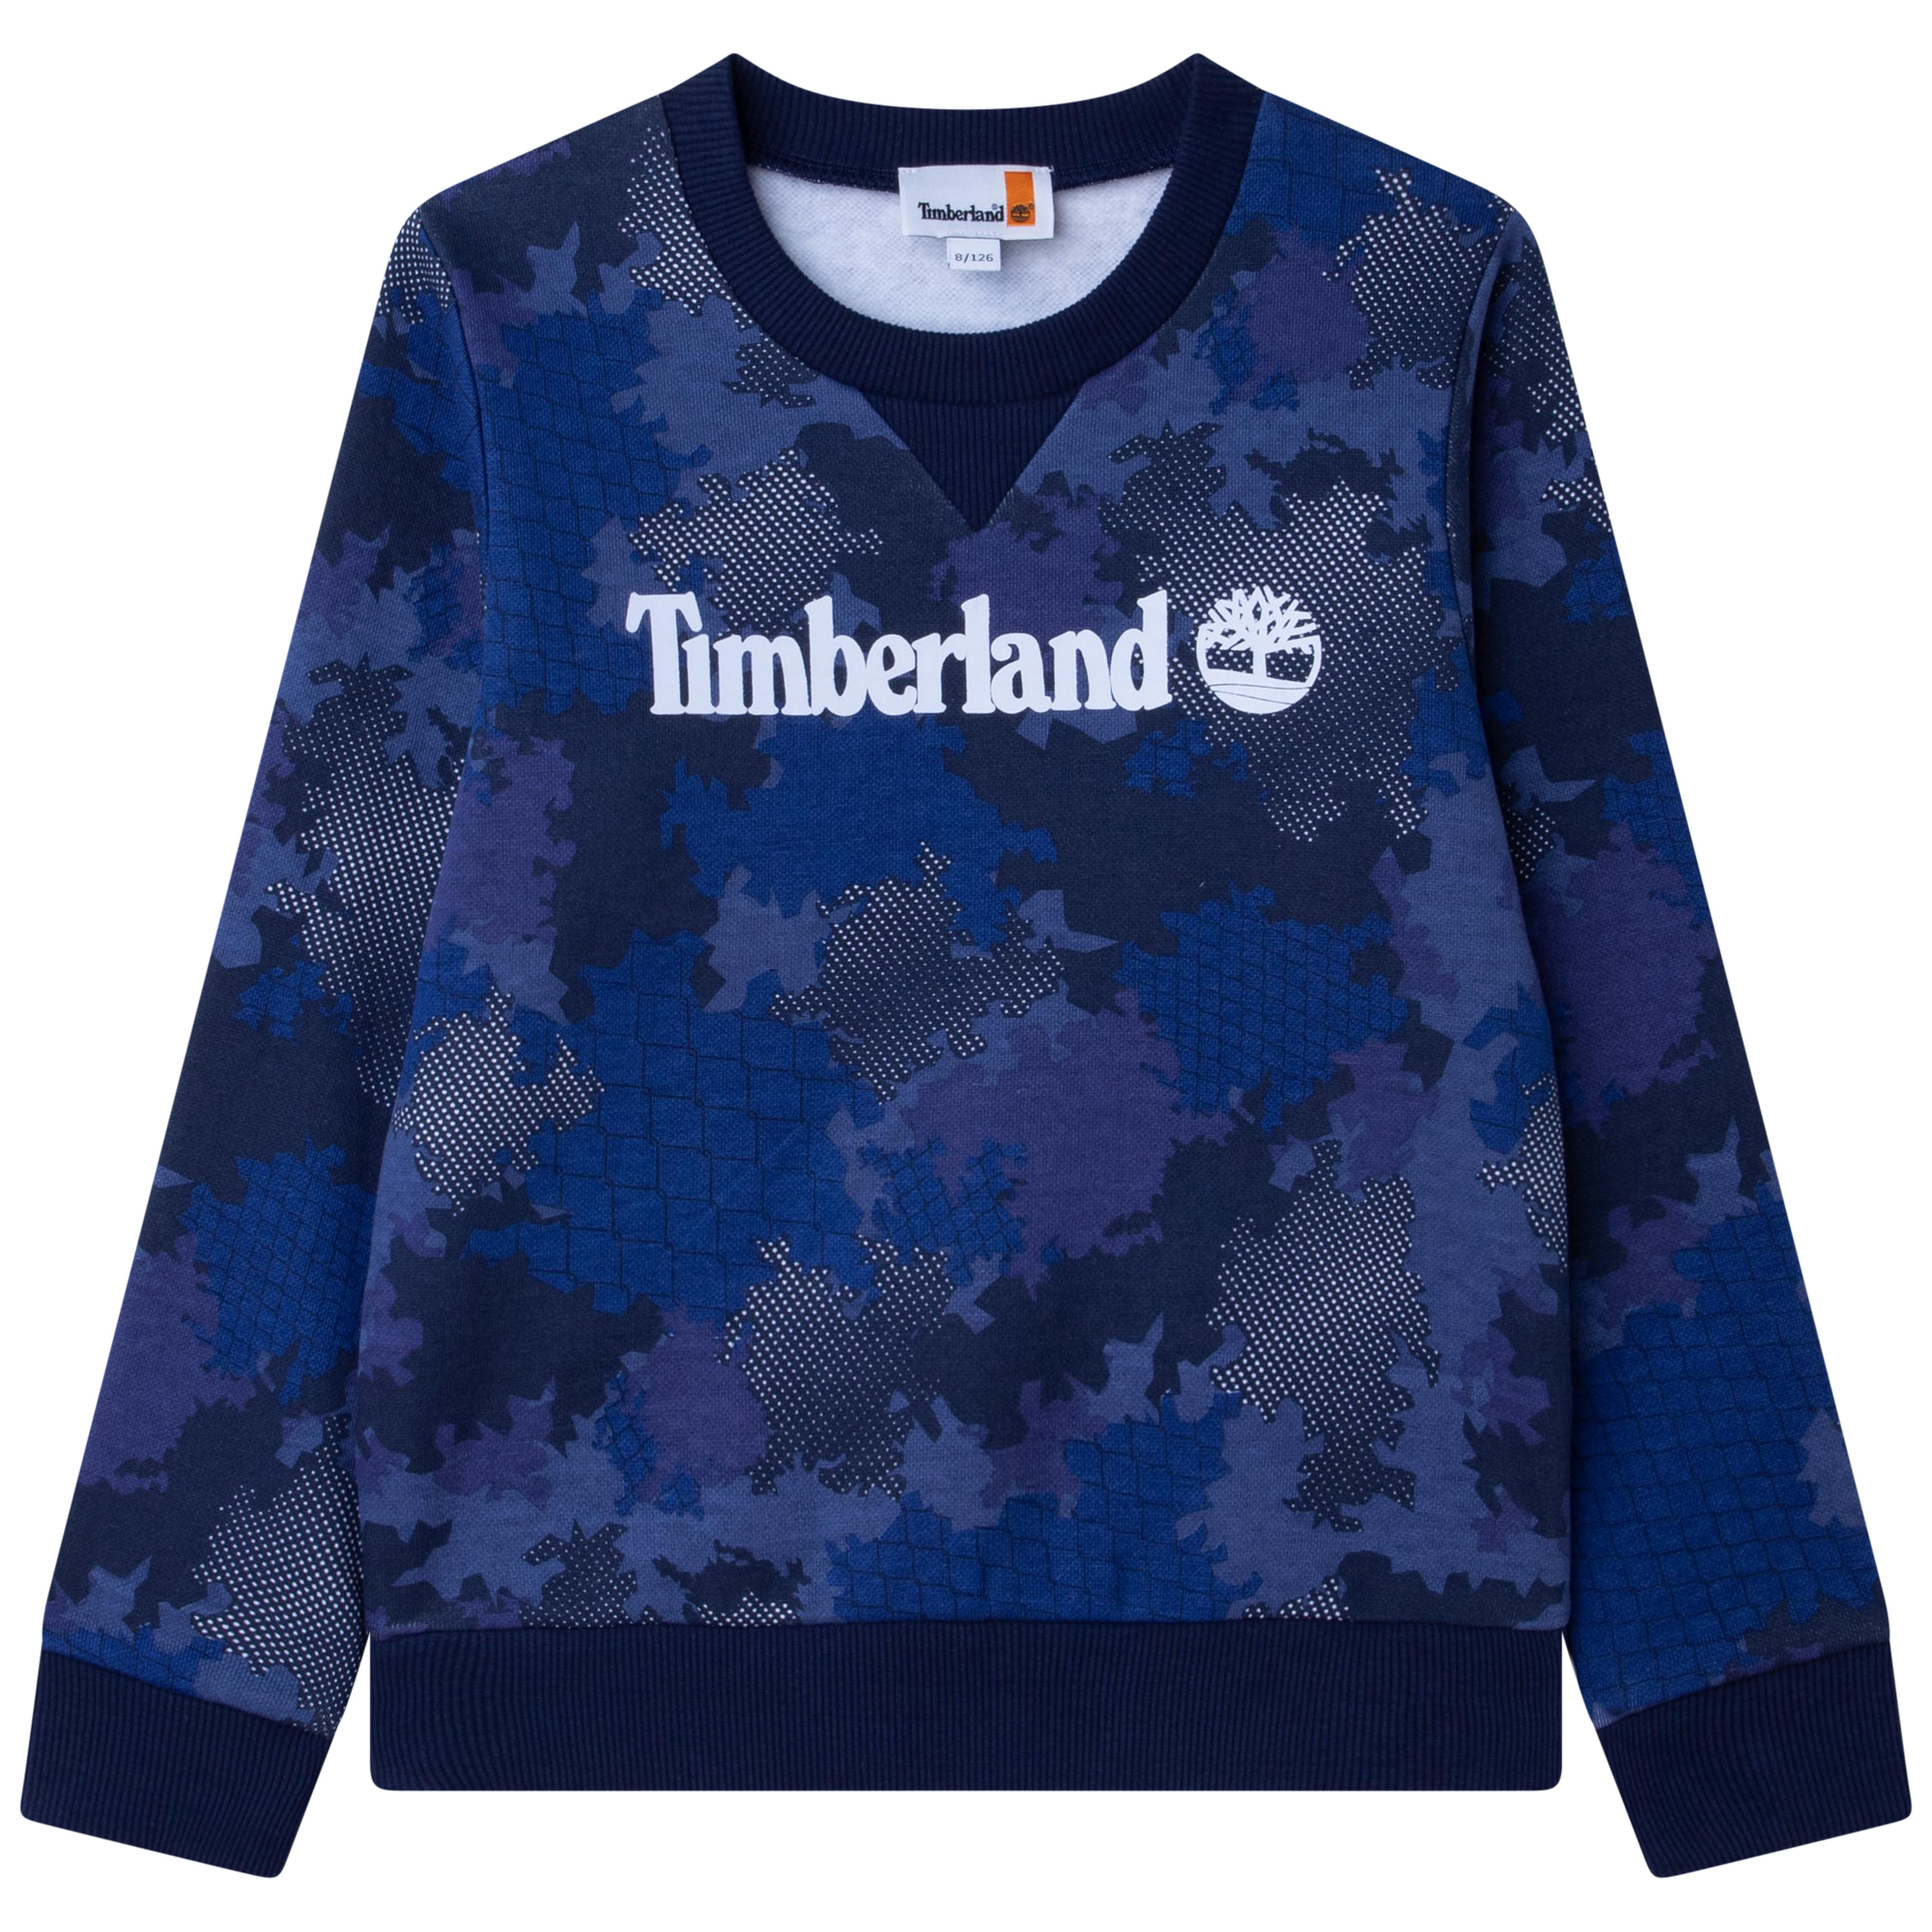 Visiter la boutique TimberlandTimberland Sweat-Shirt molletonné Enfant Bleu RECIF 6ANS 